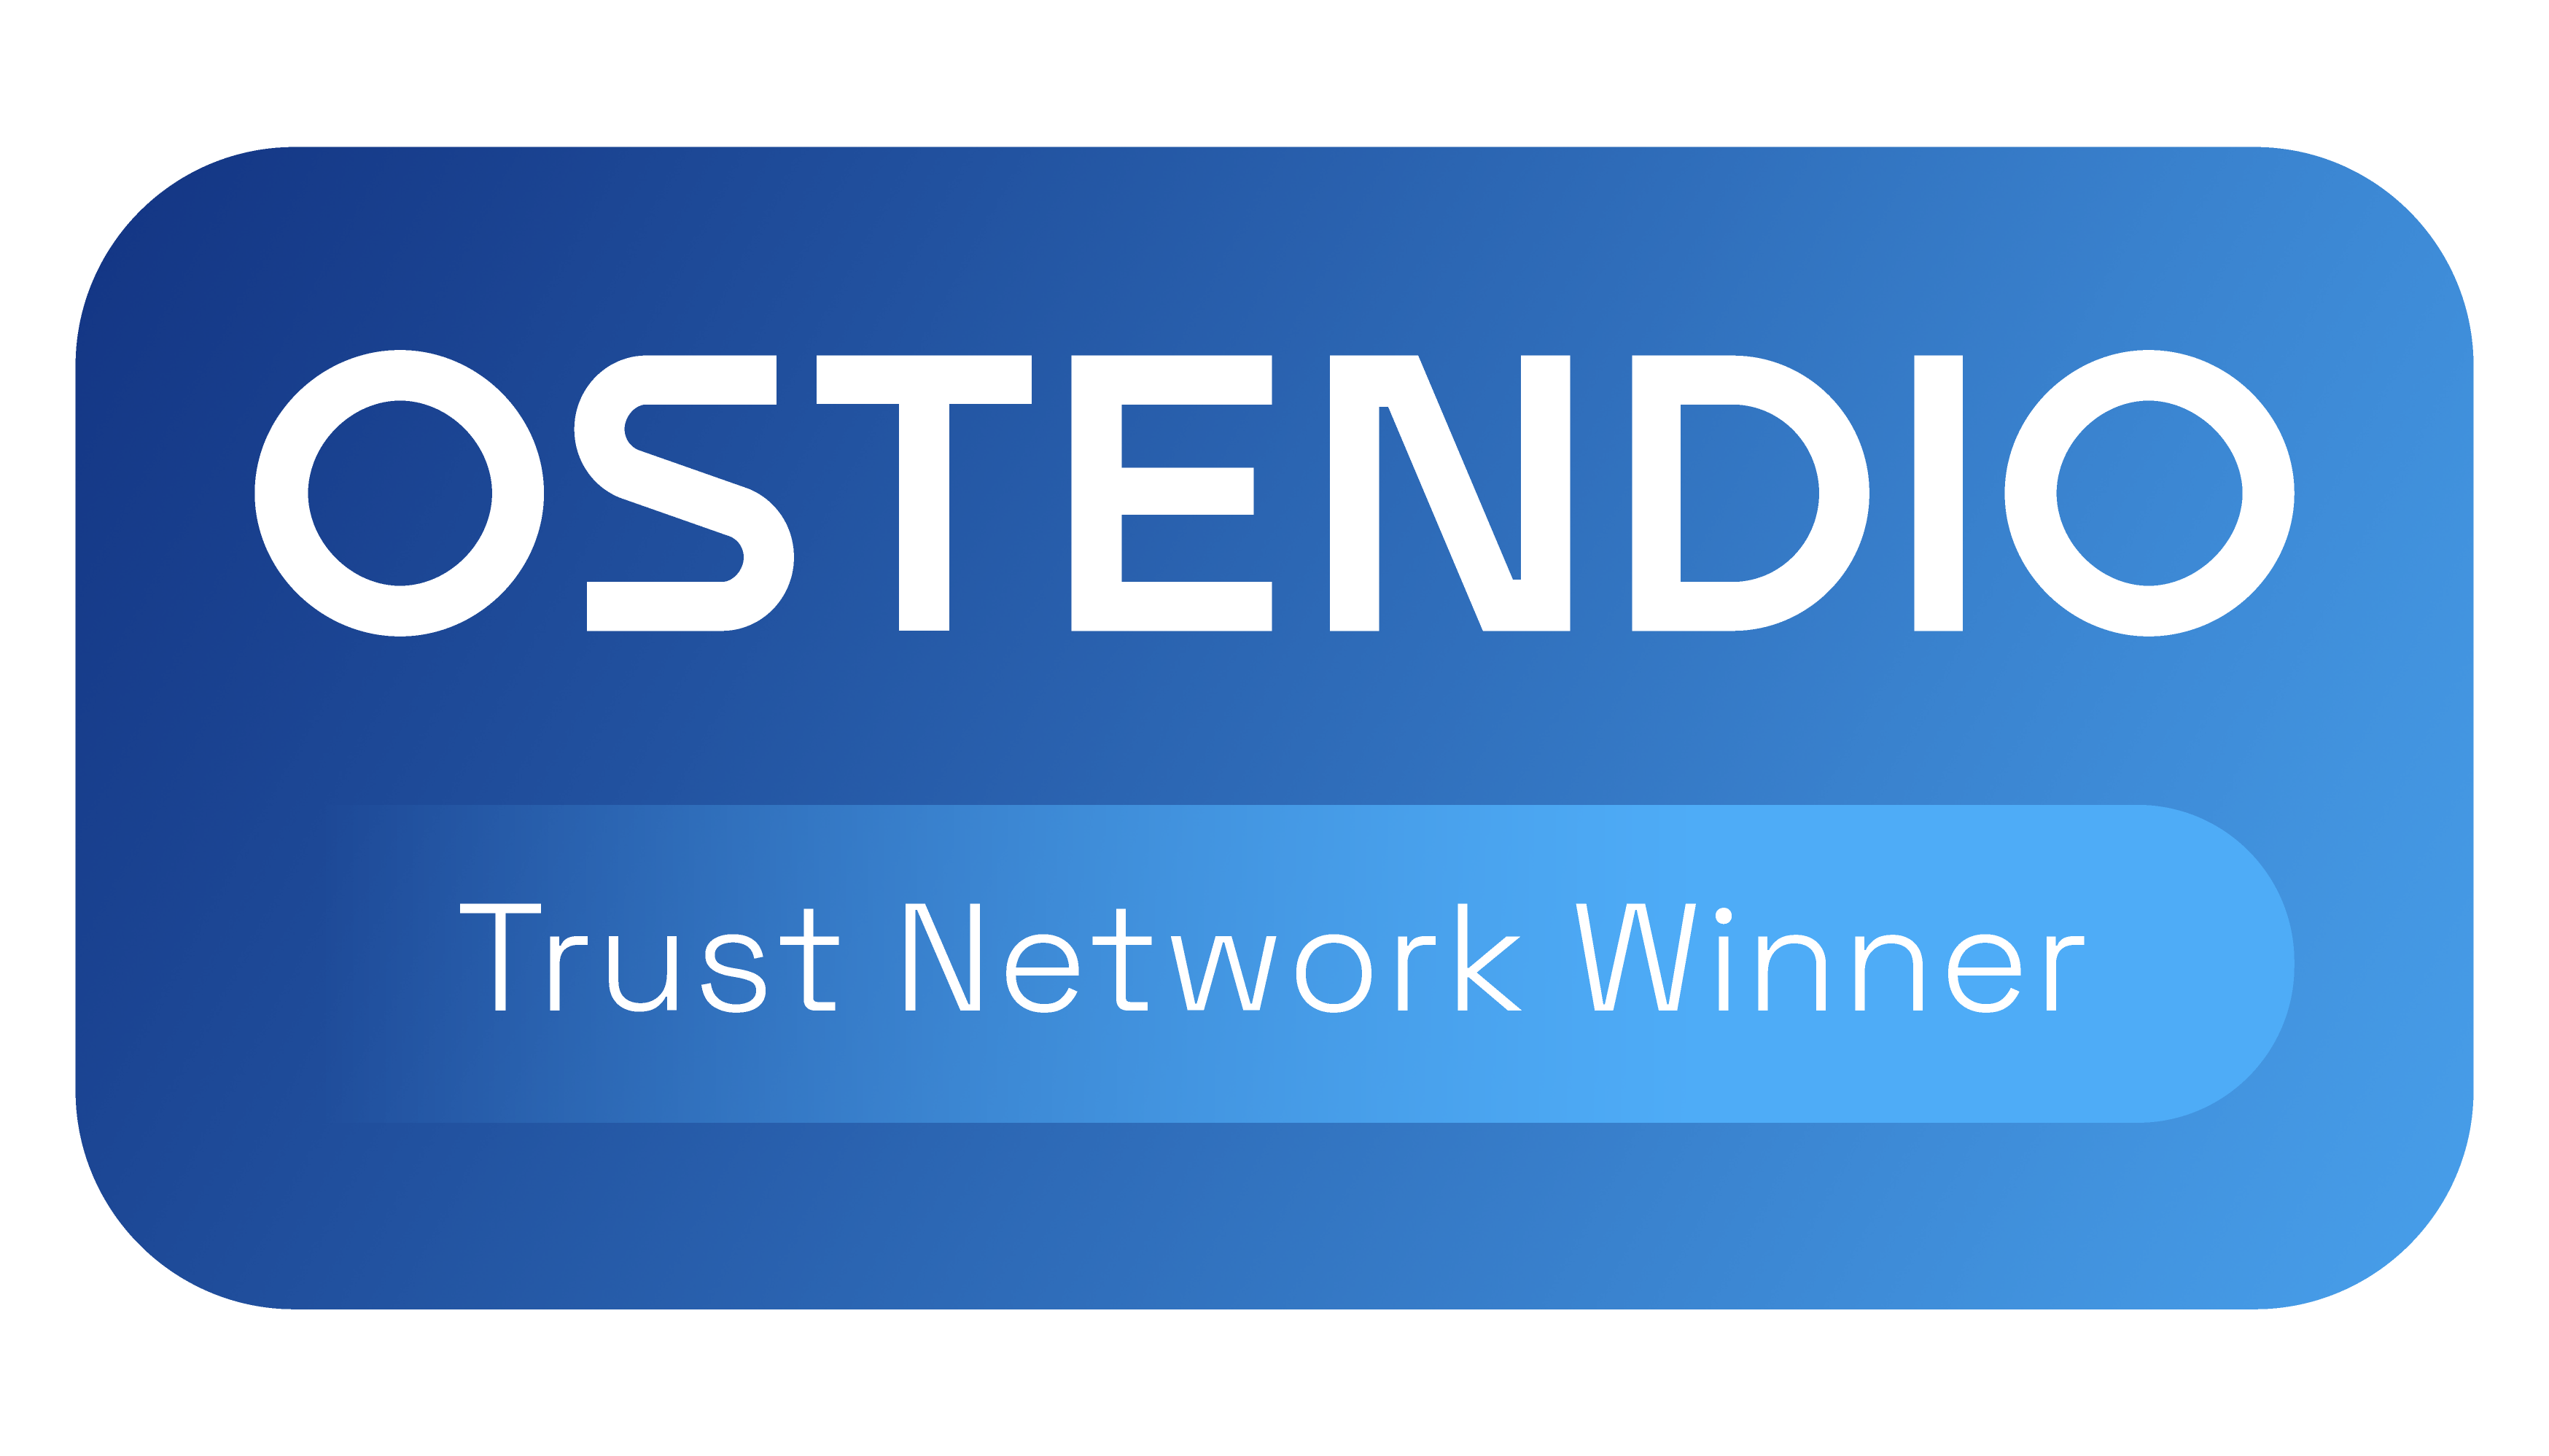 Trust Network Winner